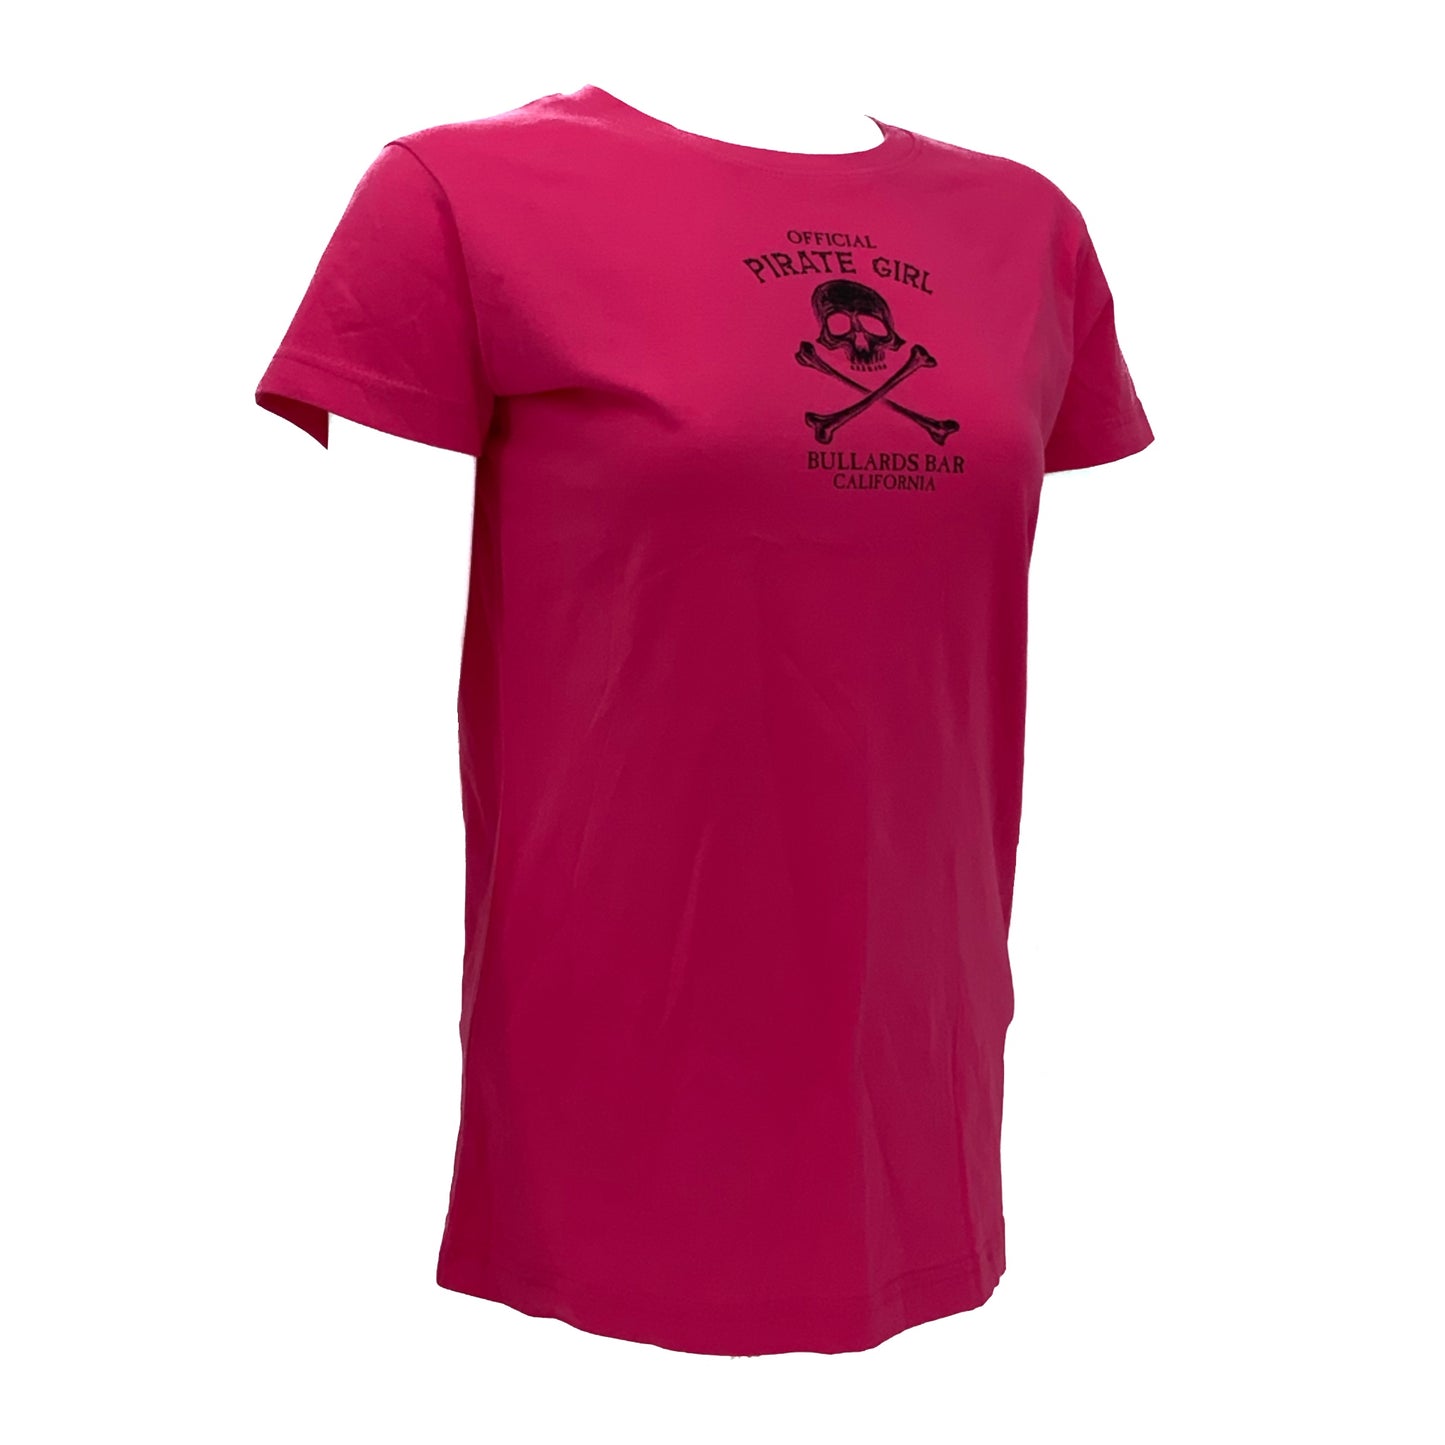 Women's Pink Pirate Shirt